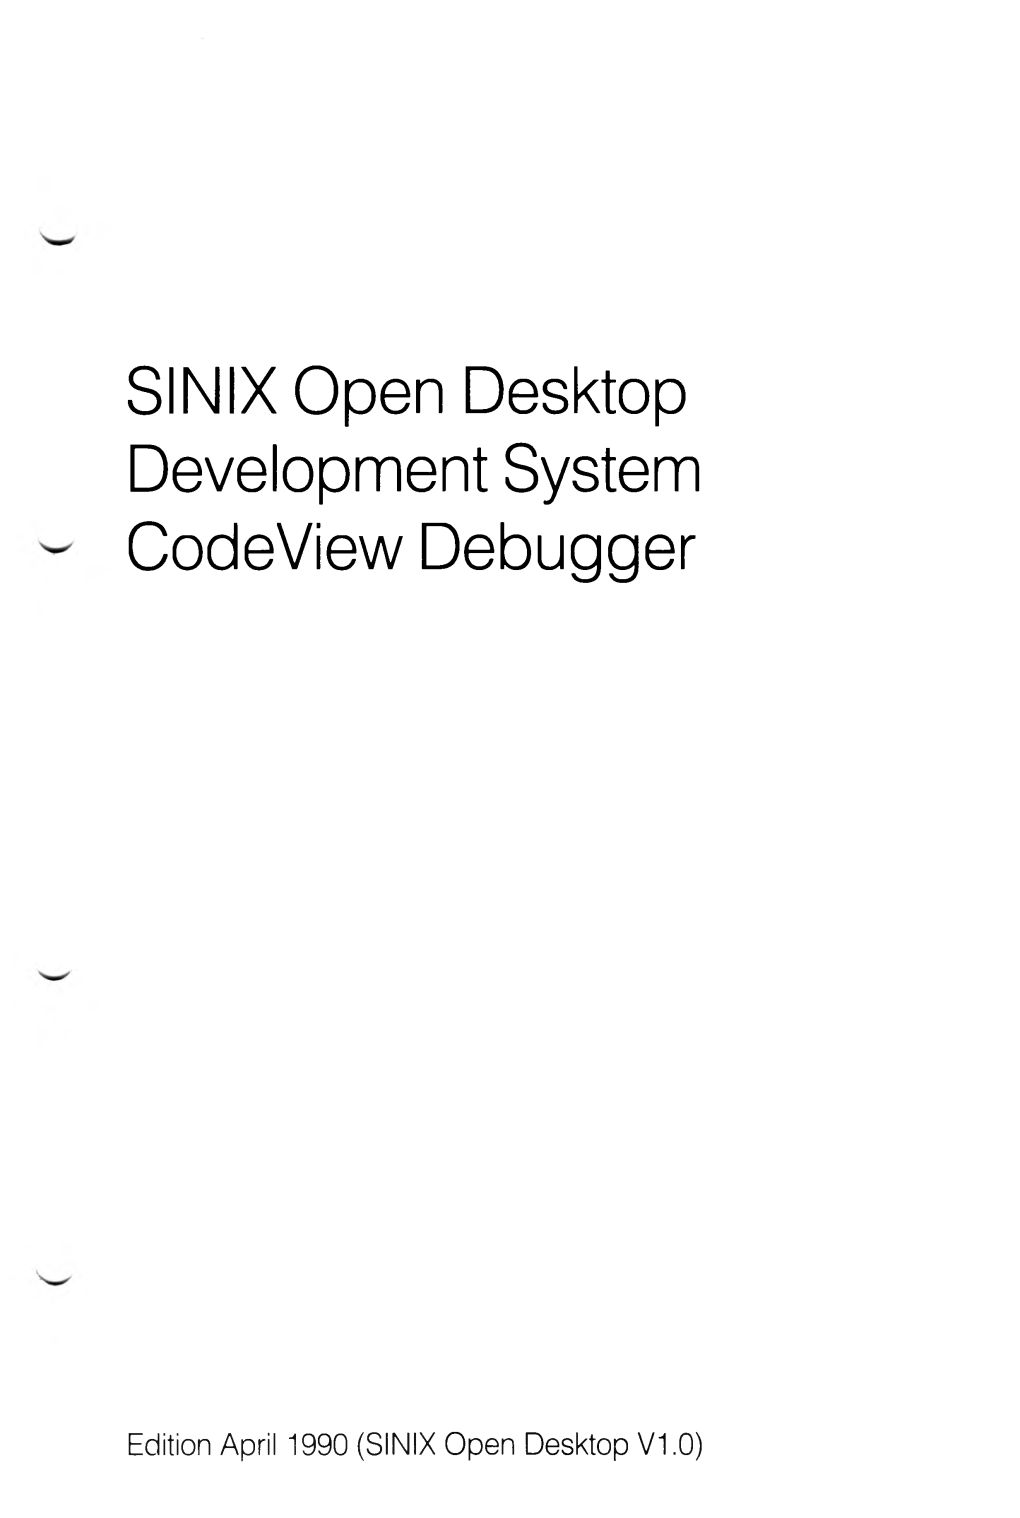 Codeview Debugger